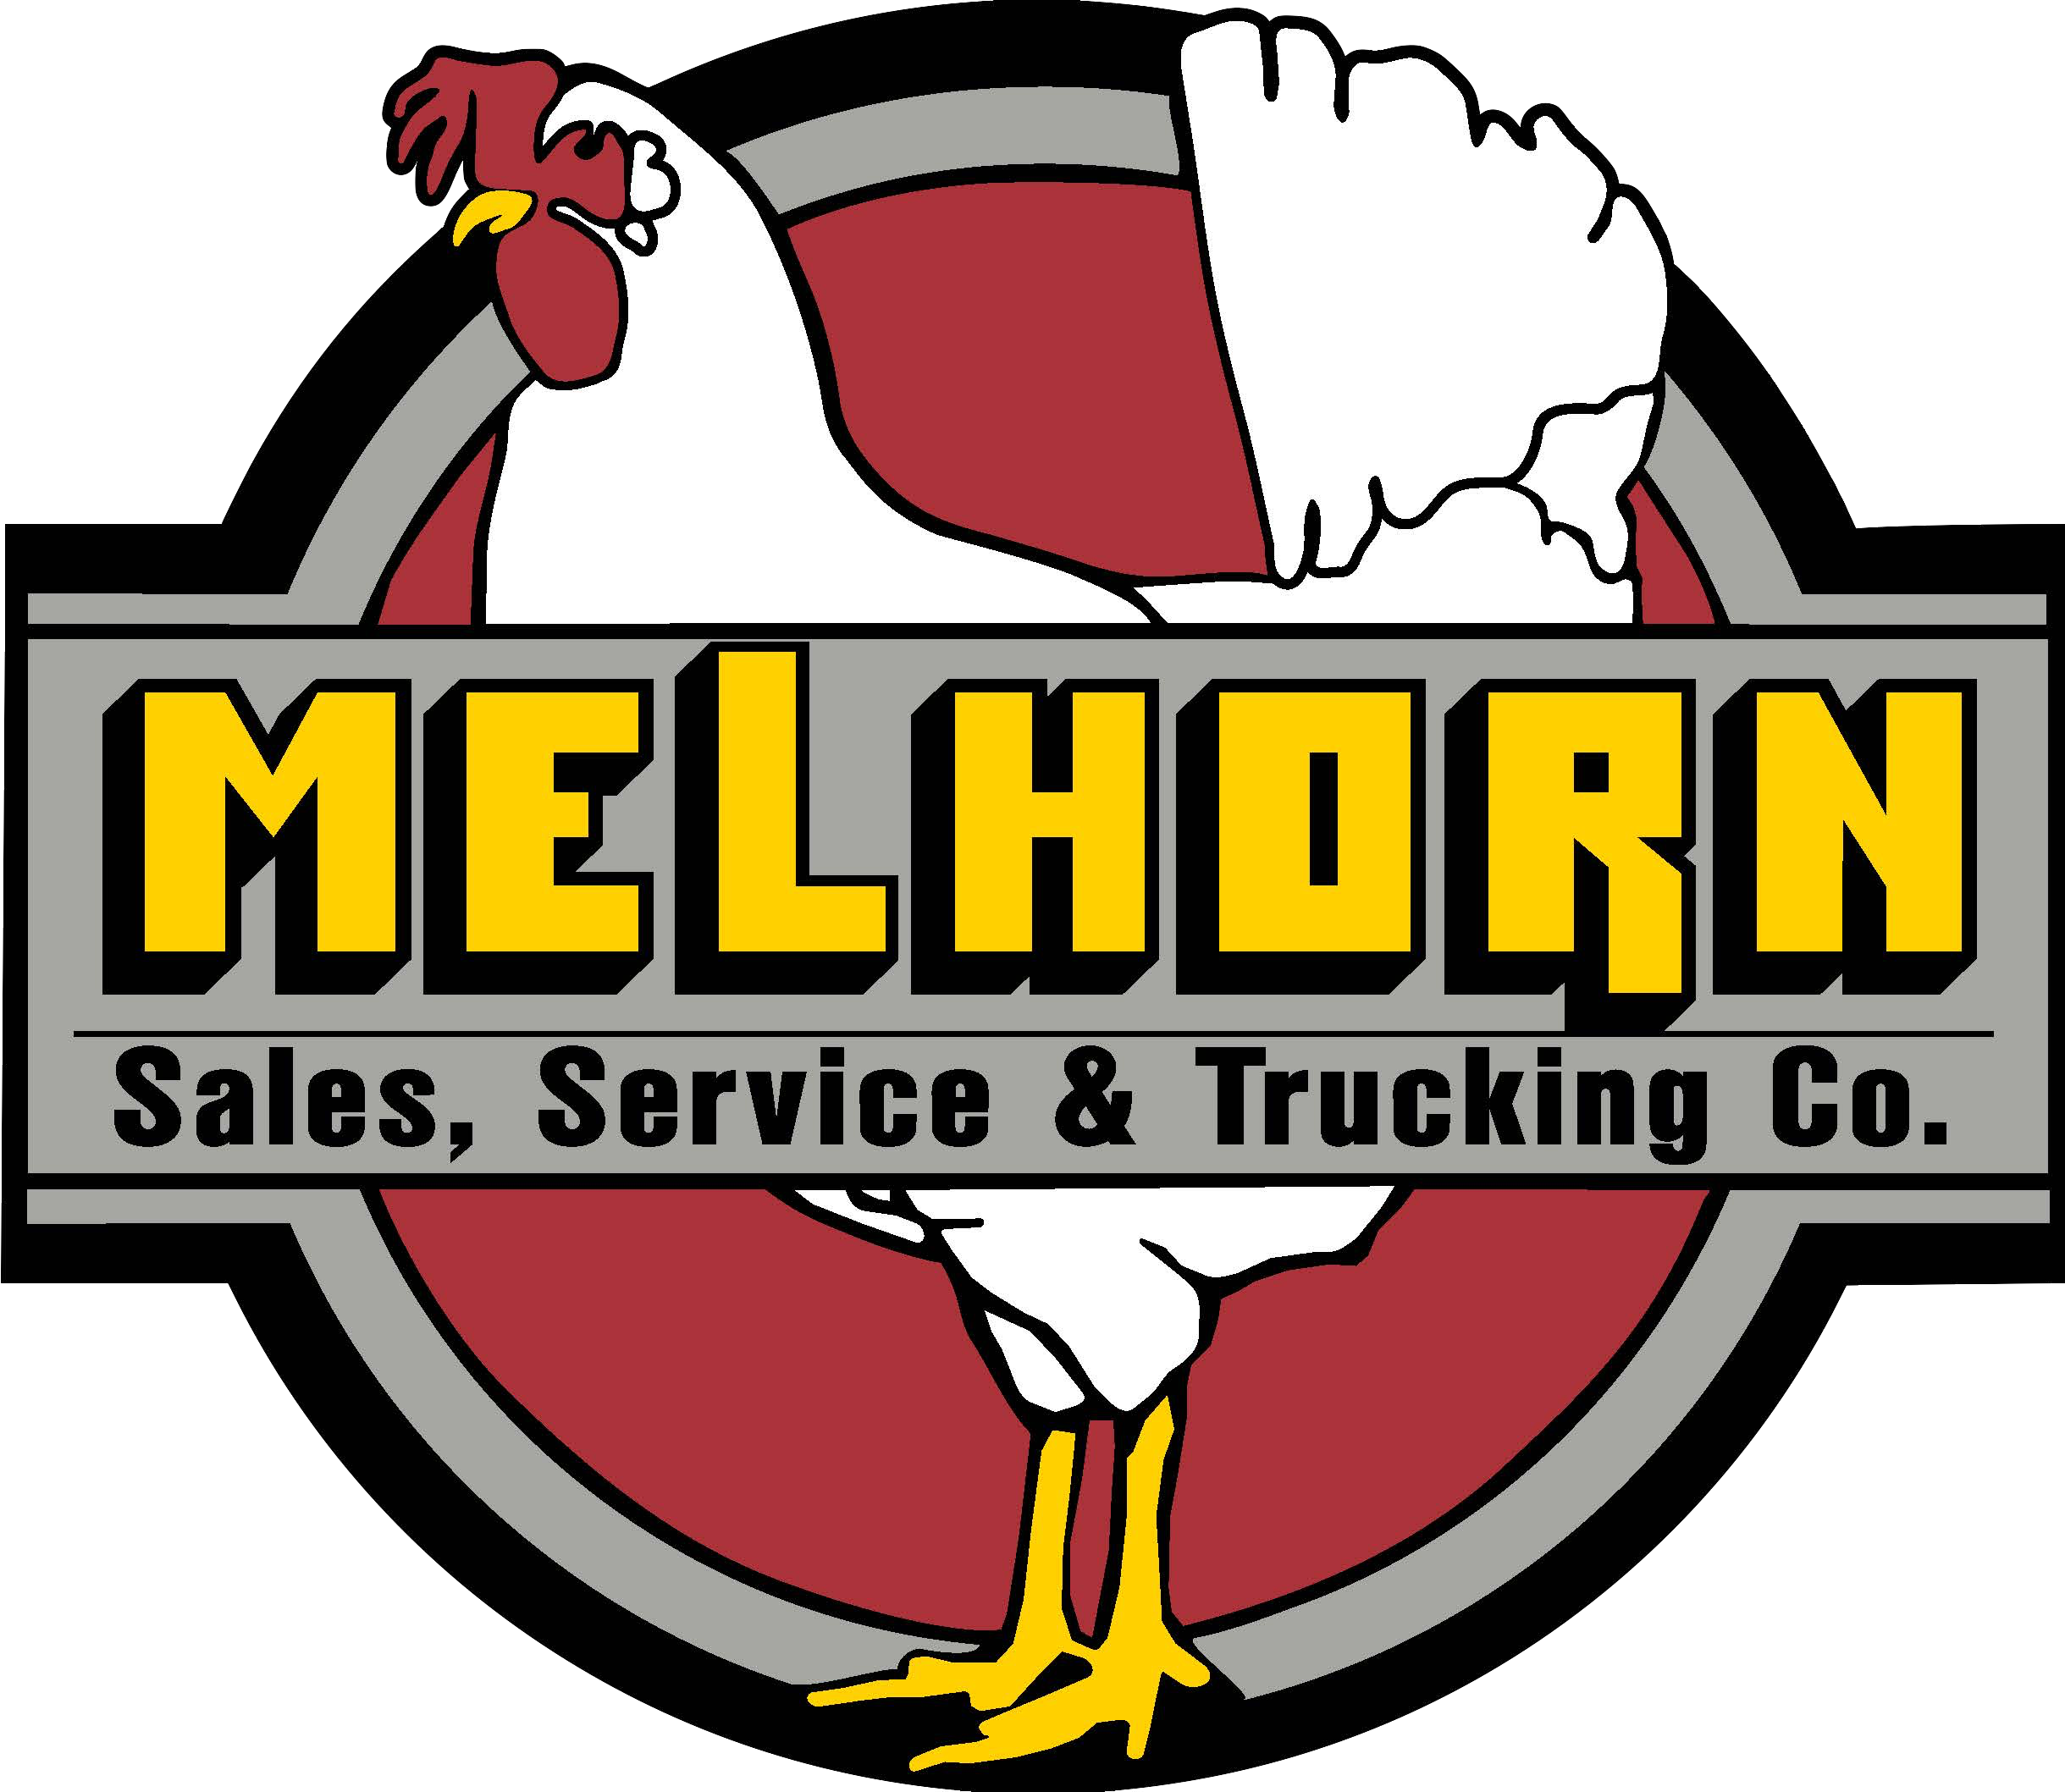 Melhorn Sales Service &amp; Trucking Co